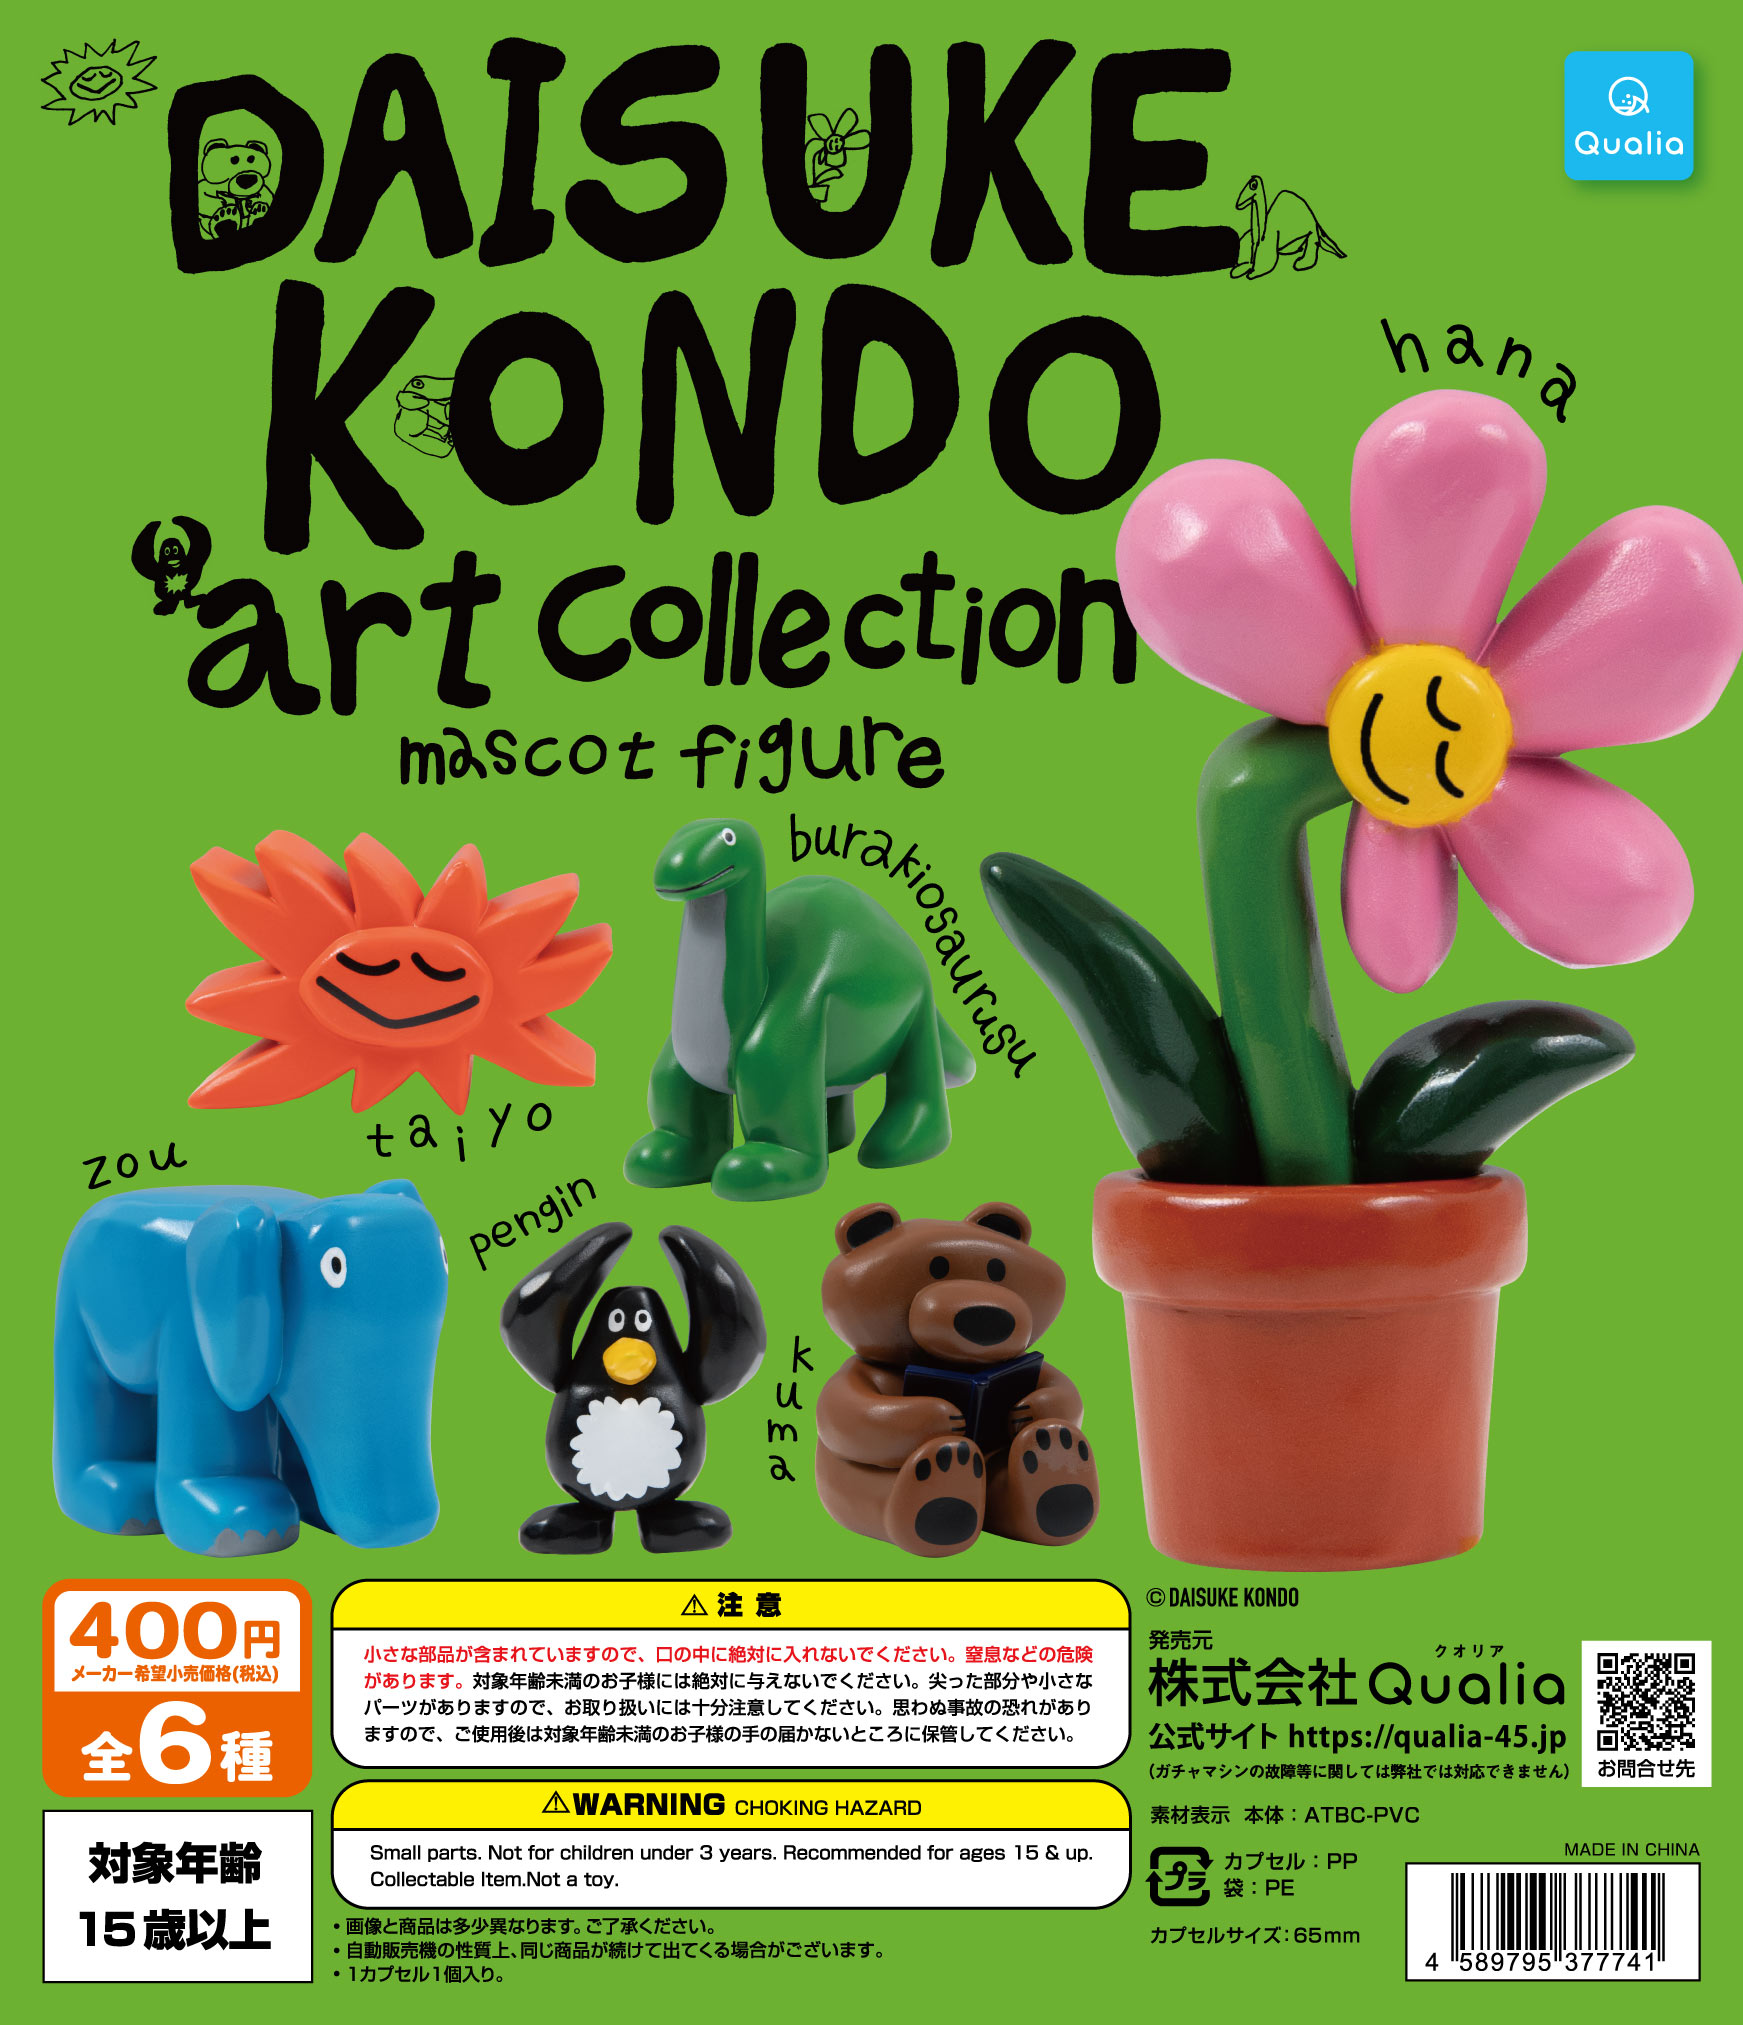 DAISUKE KONDO art collection mascot figure